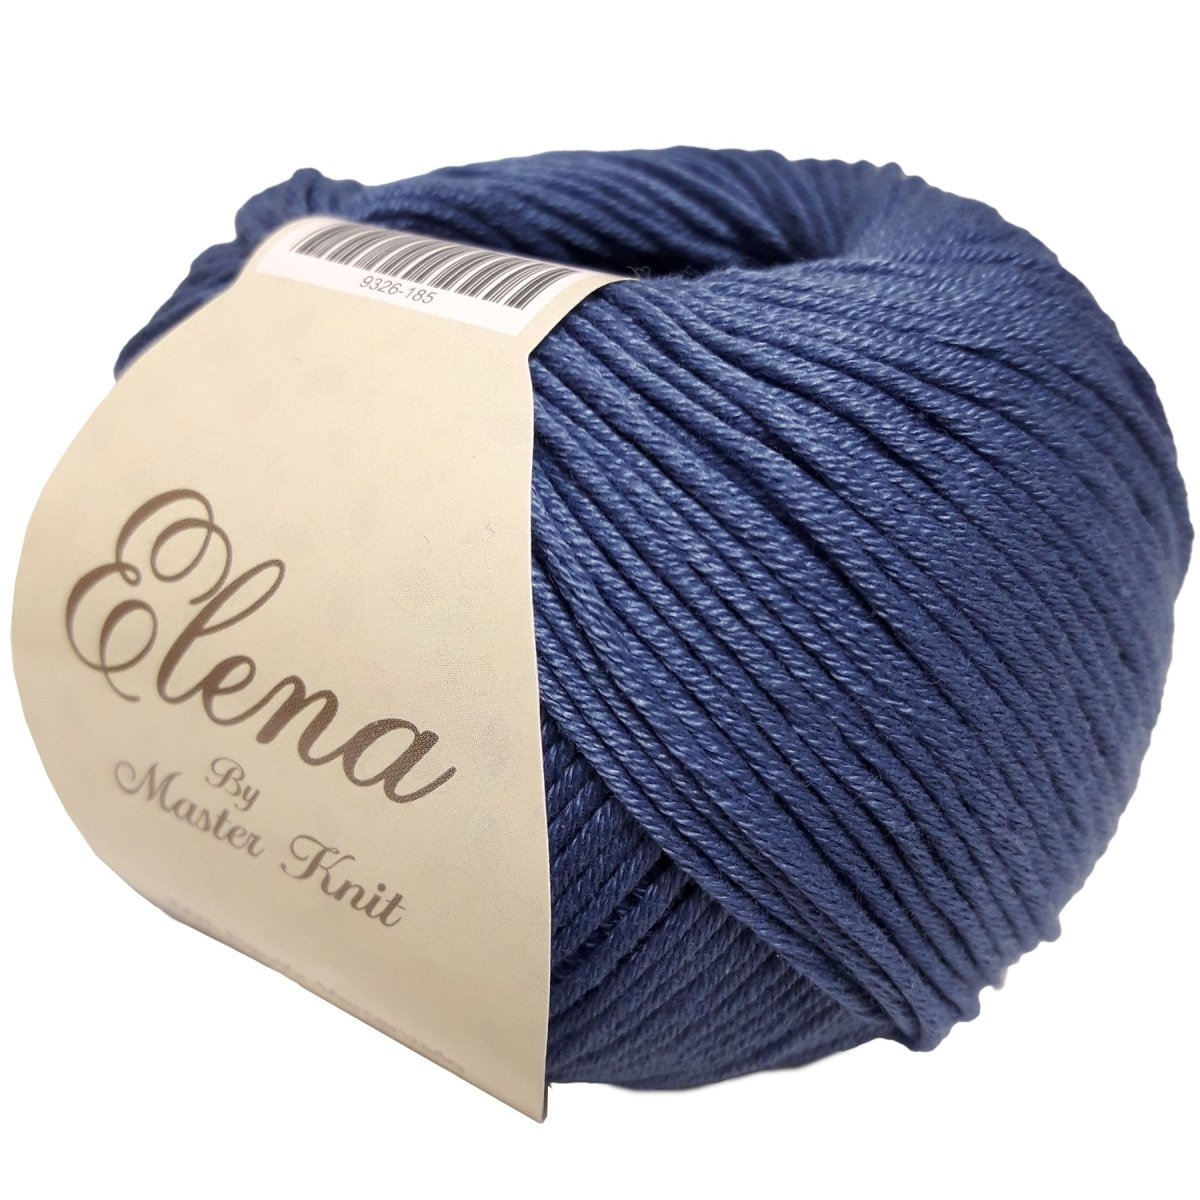 ELENA - Crochetstores9326-185745051438807